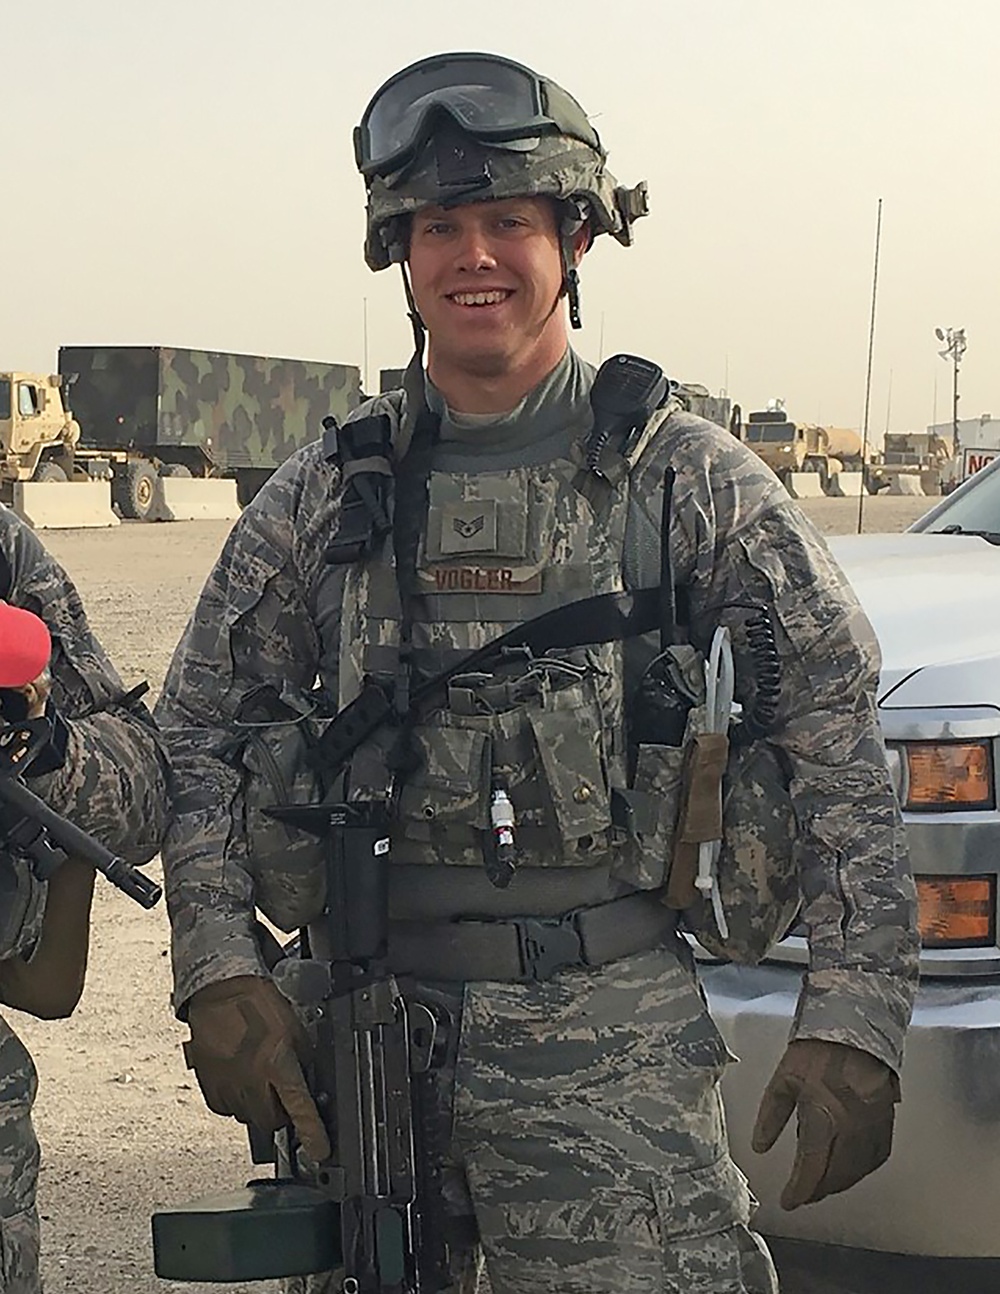 Technical Sgt. Nicholas Vogler